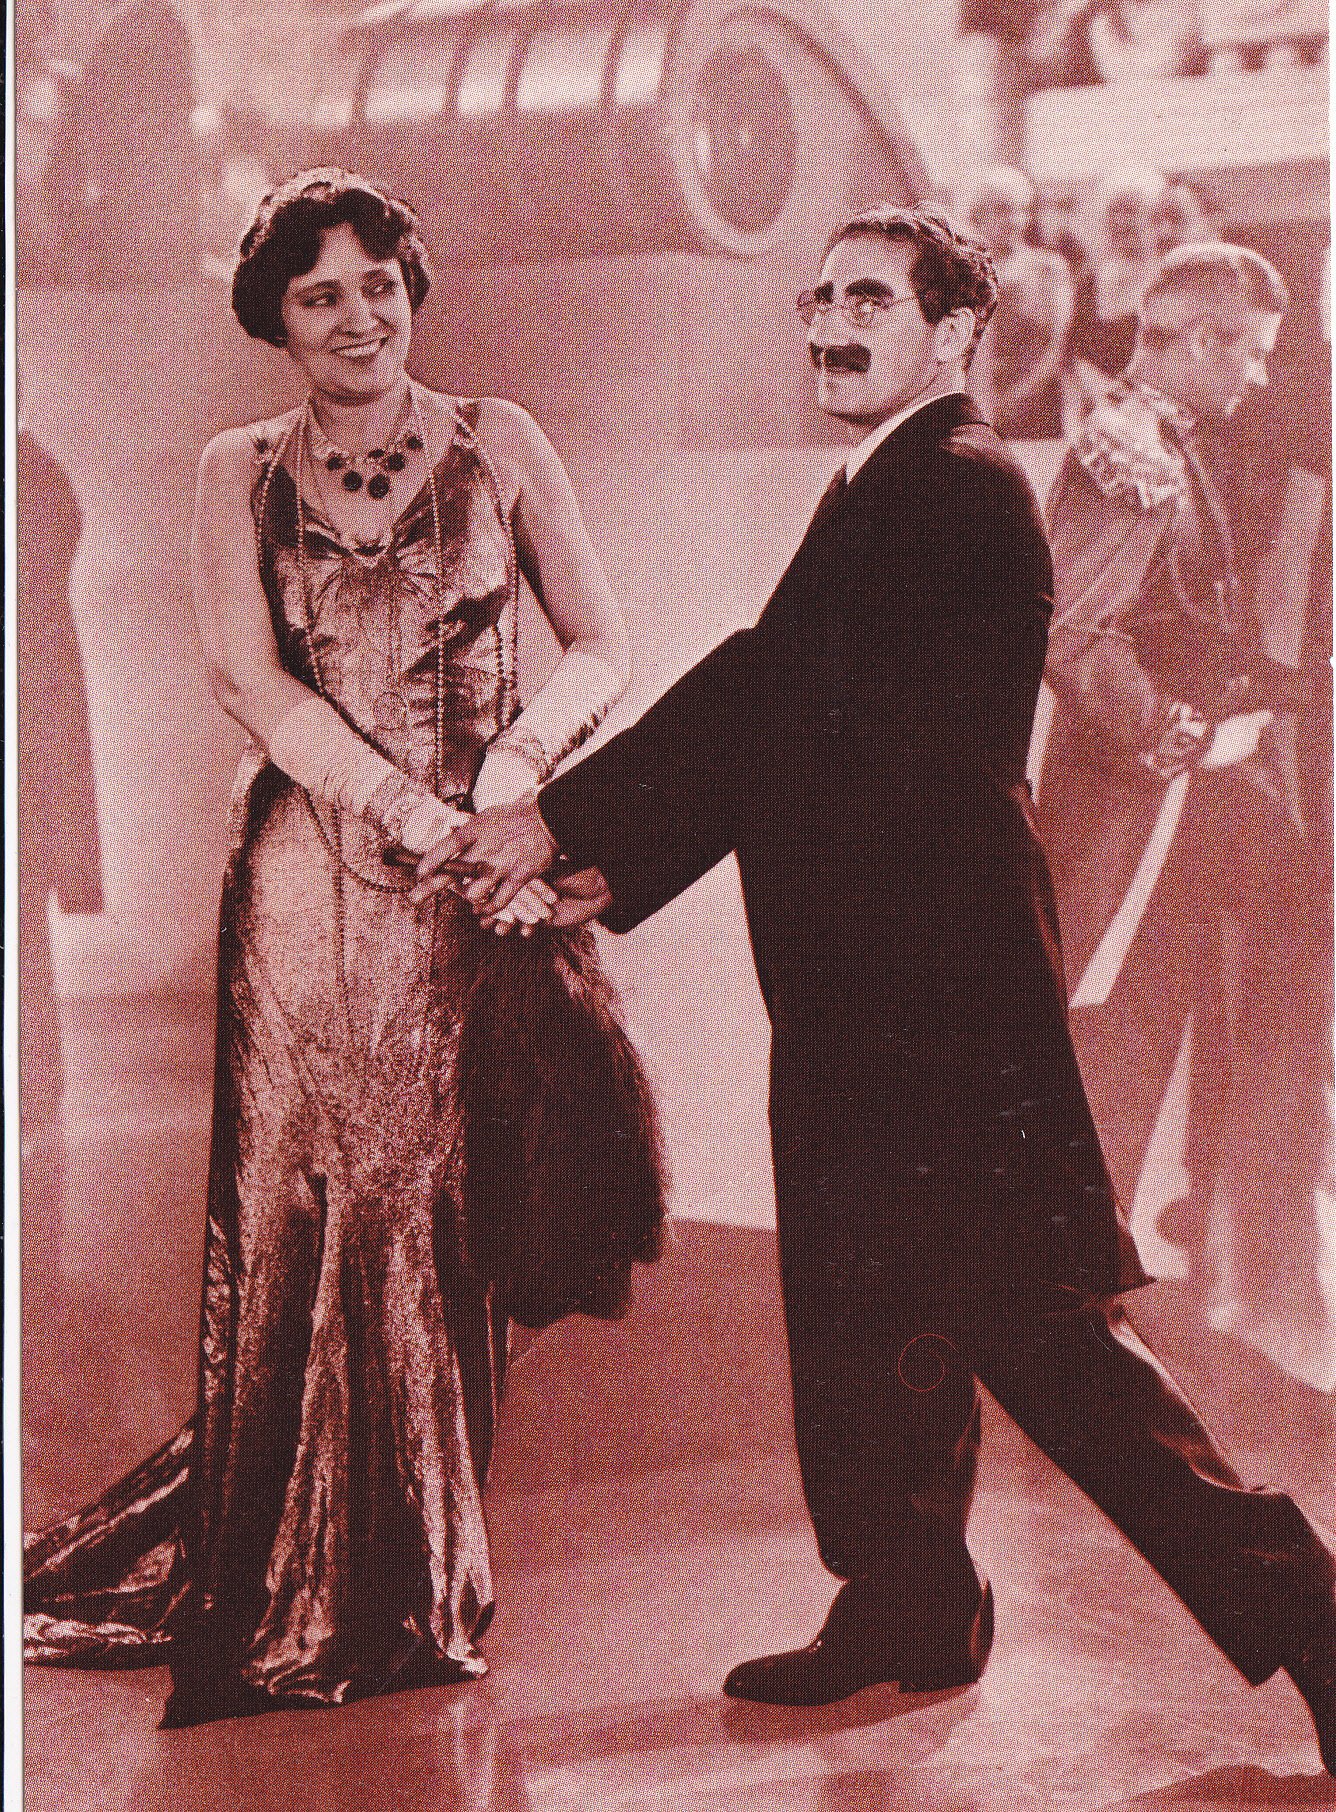 Groucho Marx and Margaret Dumont